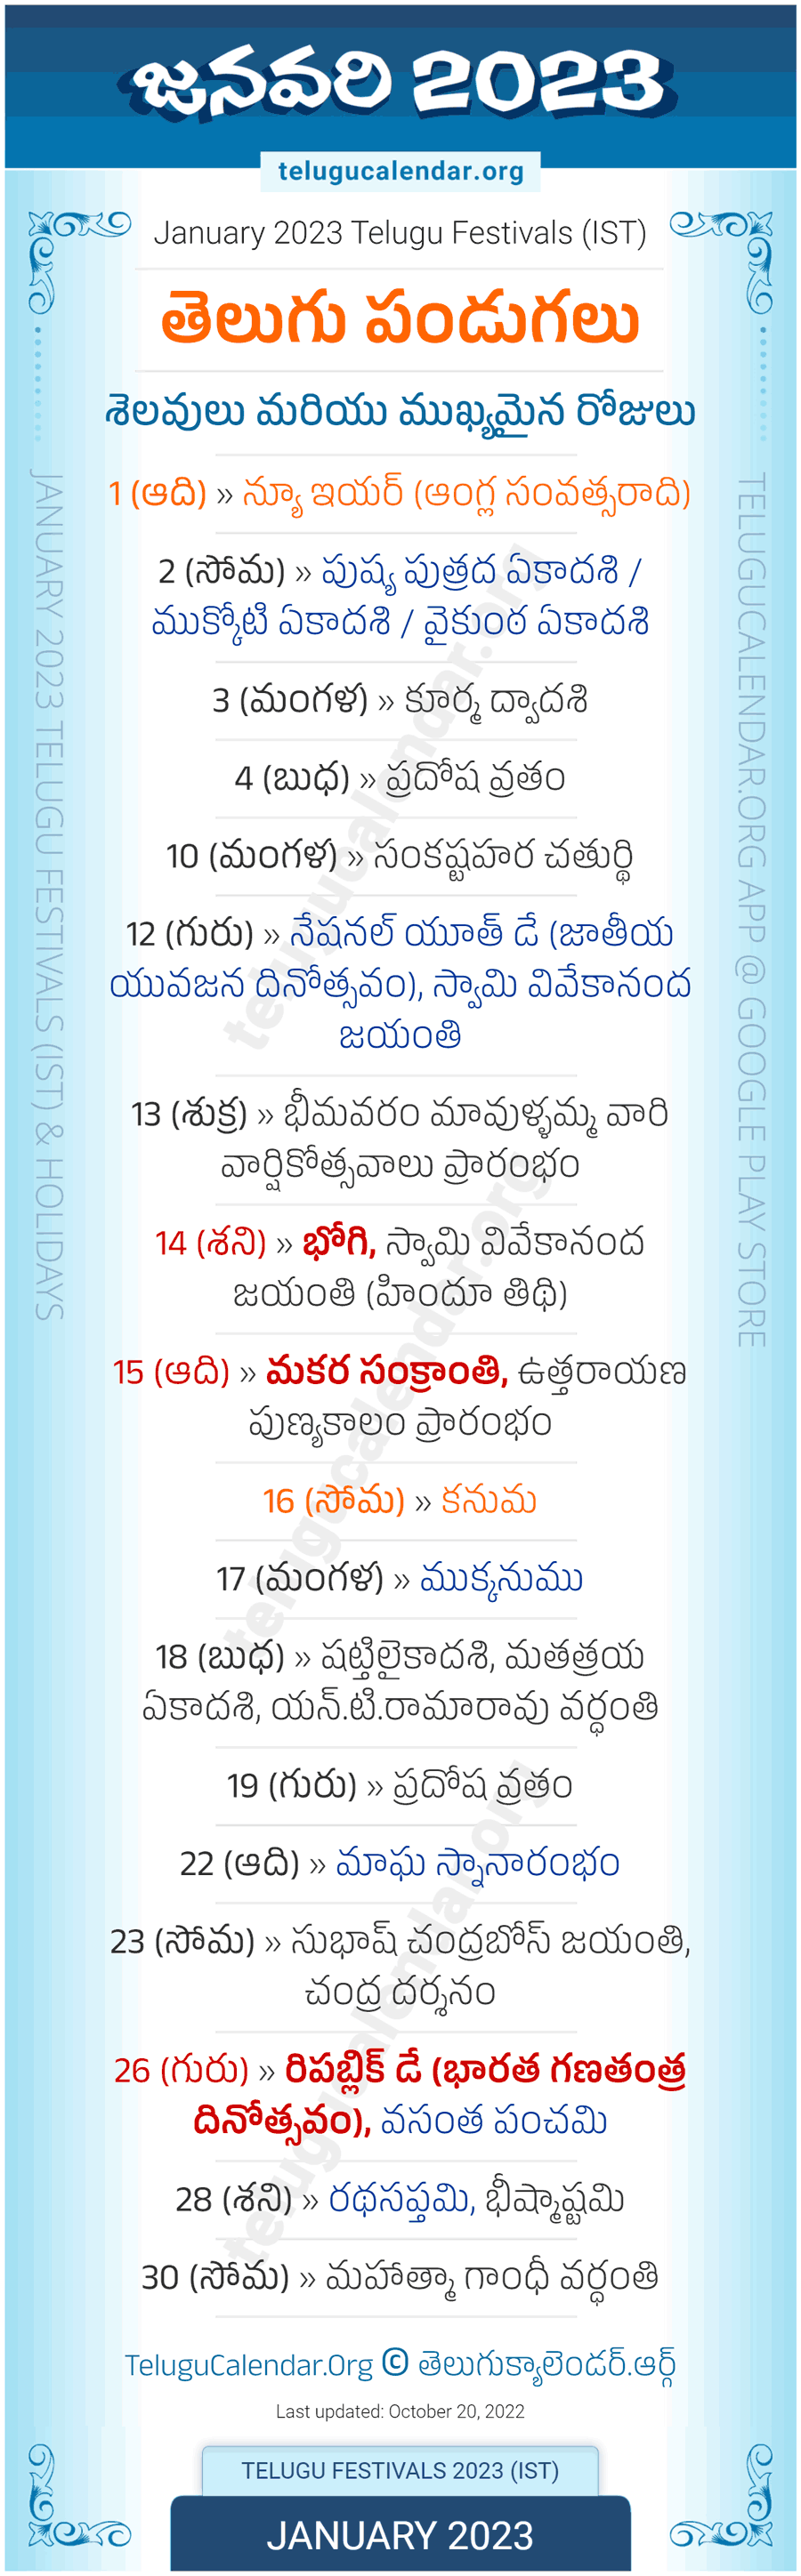 Telugu Festivals 2023 January